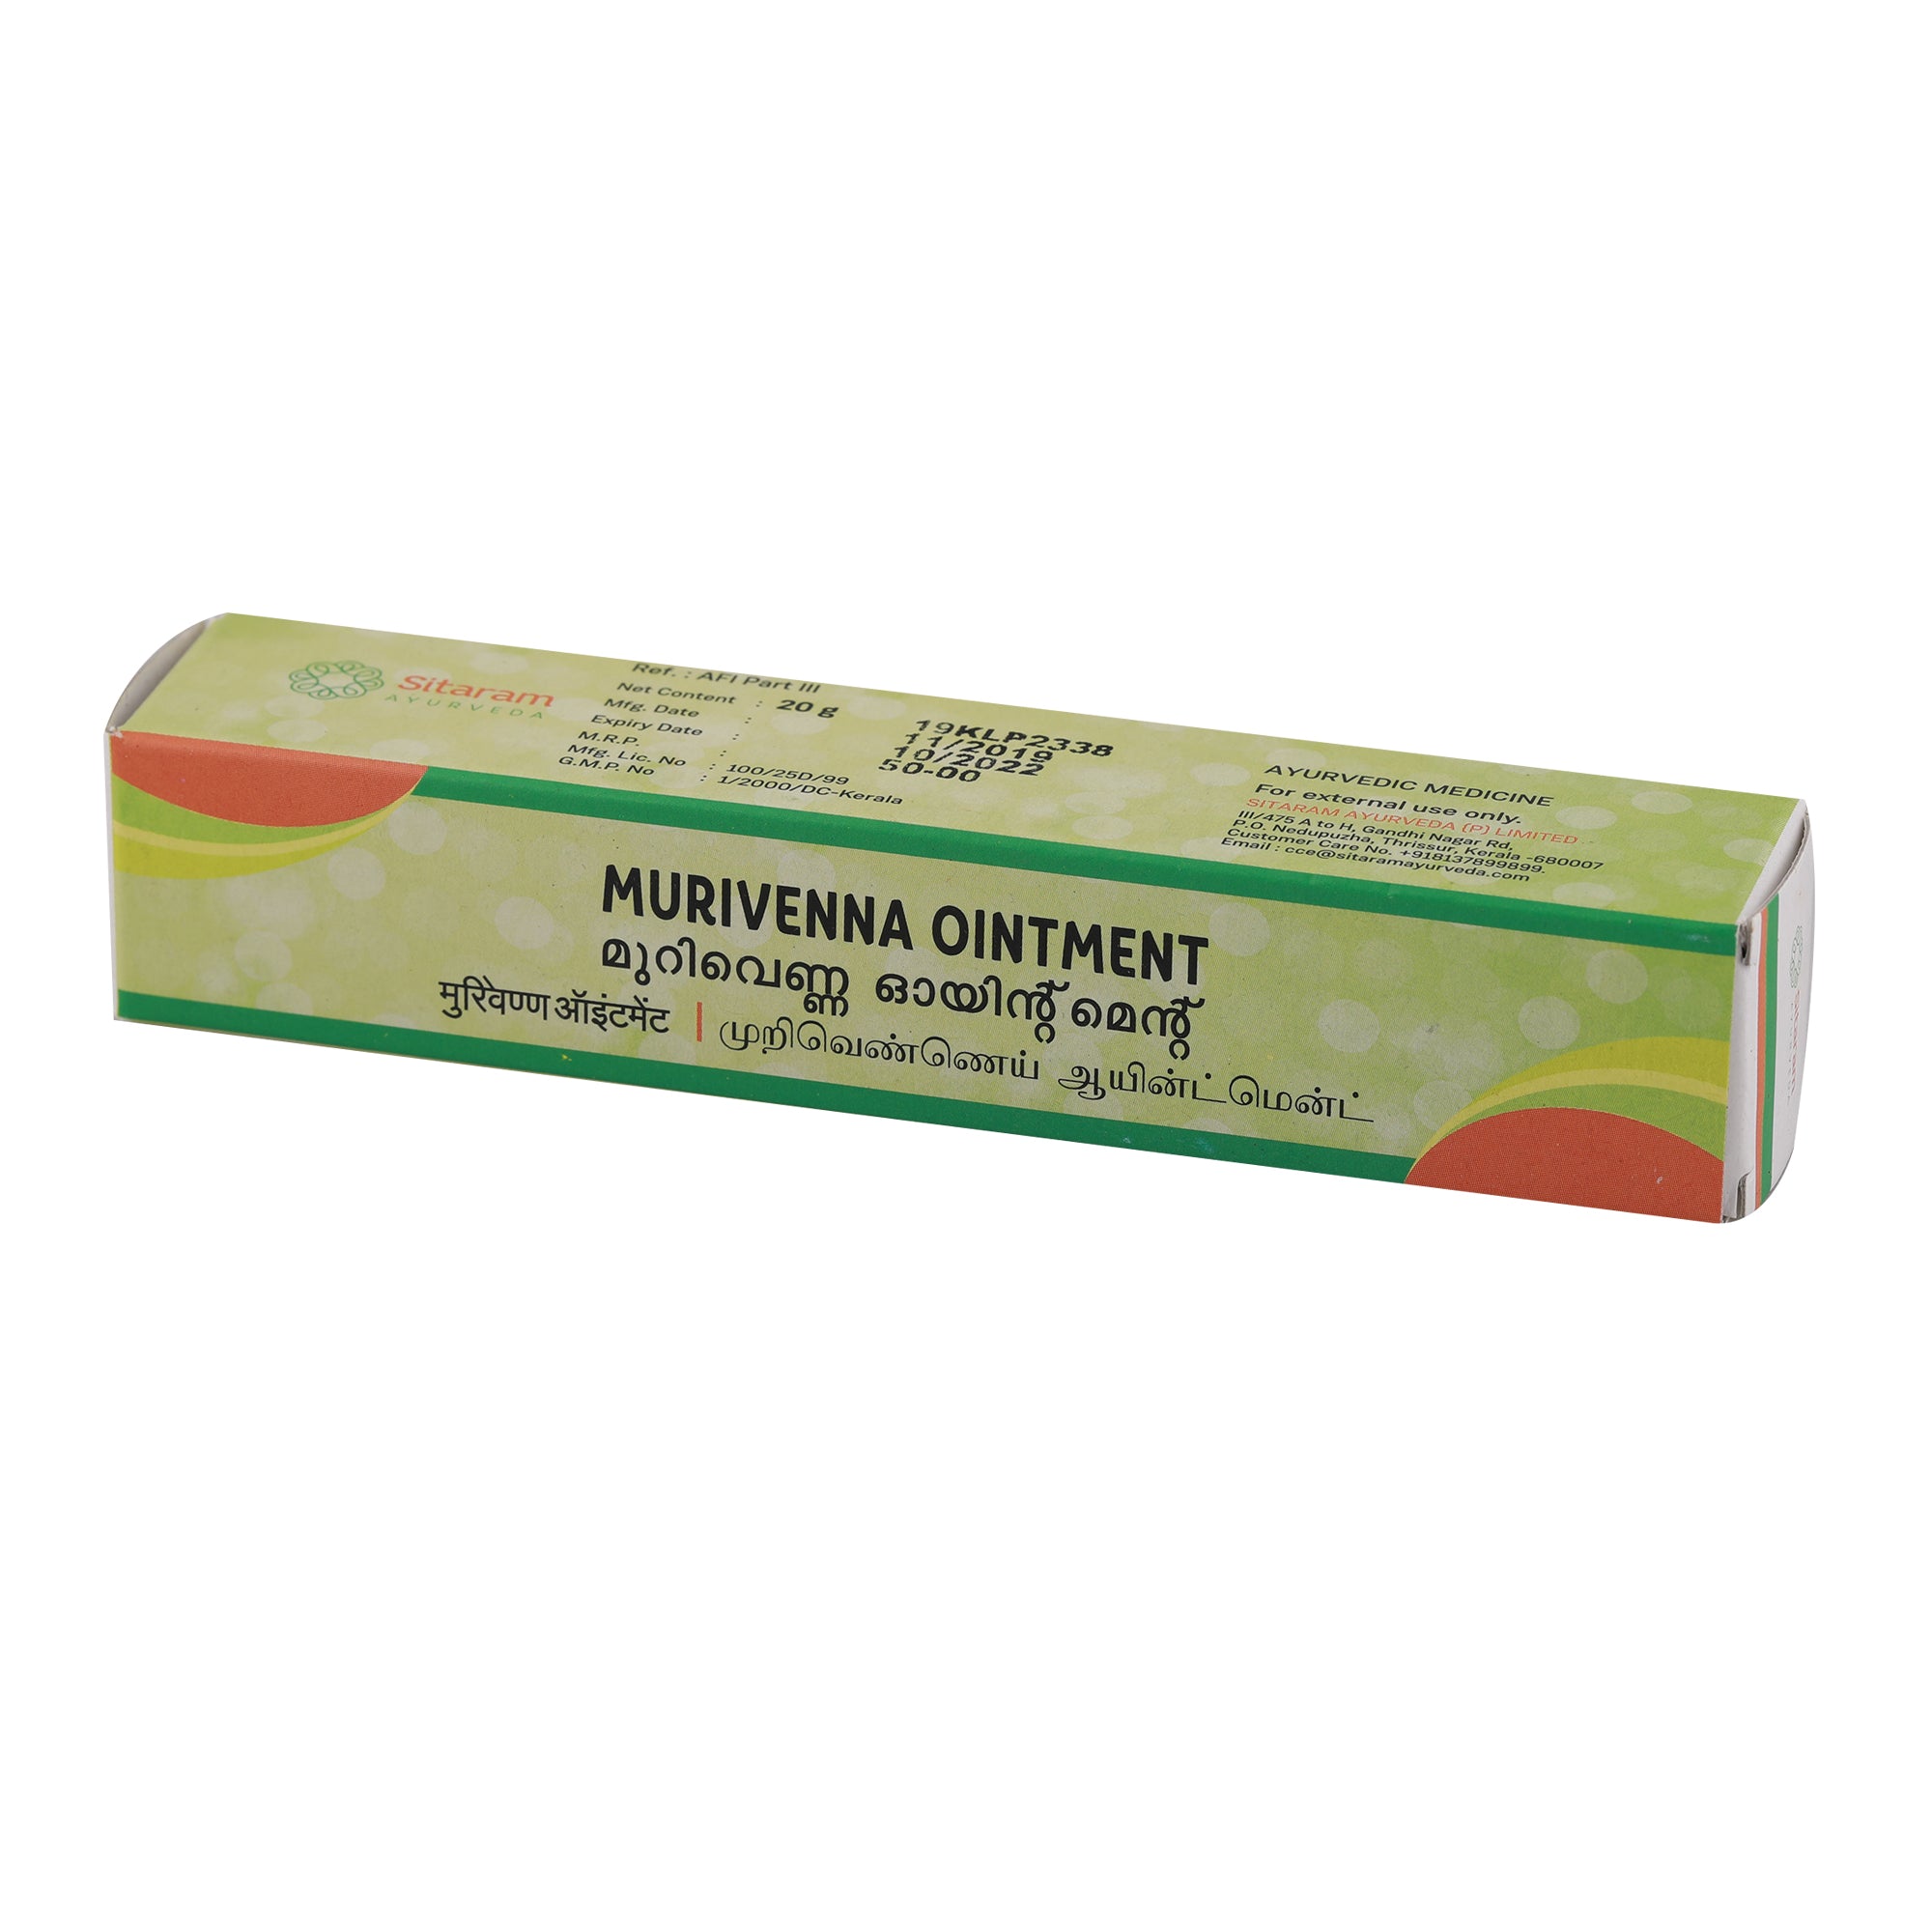 Sitaram Ayurveda Murivenna Ointment 20 Gm - Pack of 2 (Prescription Medication)